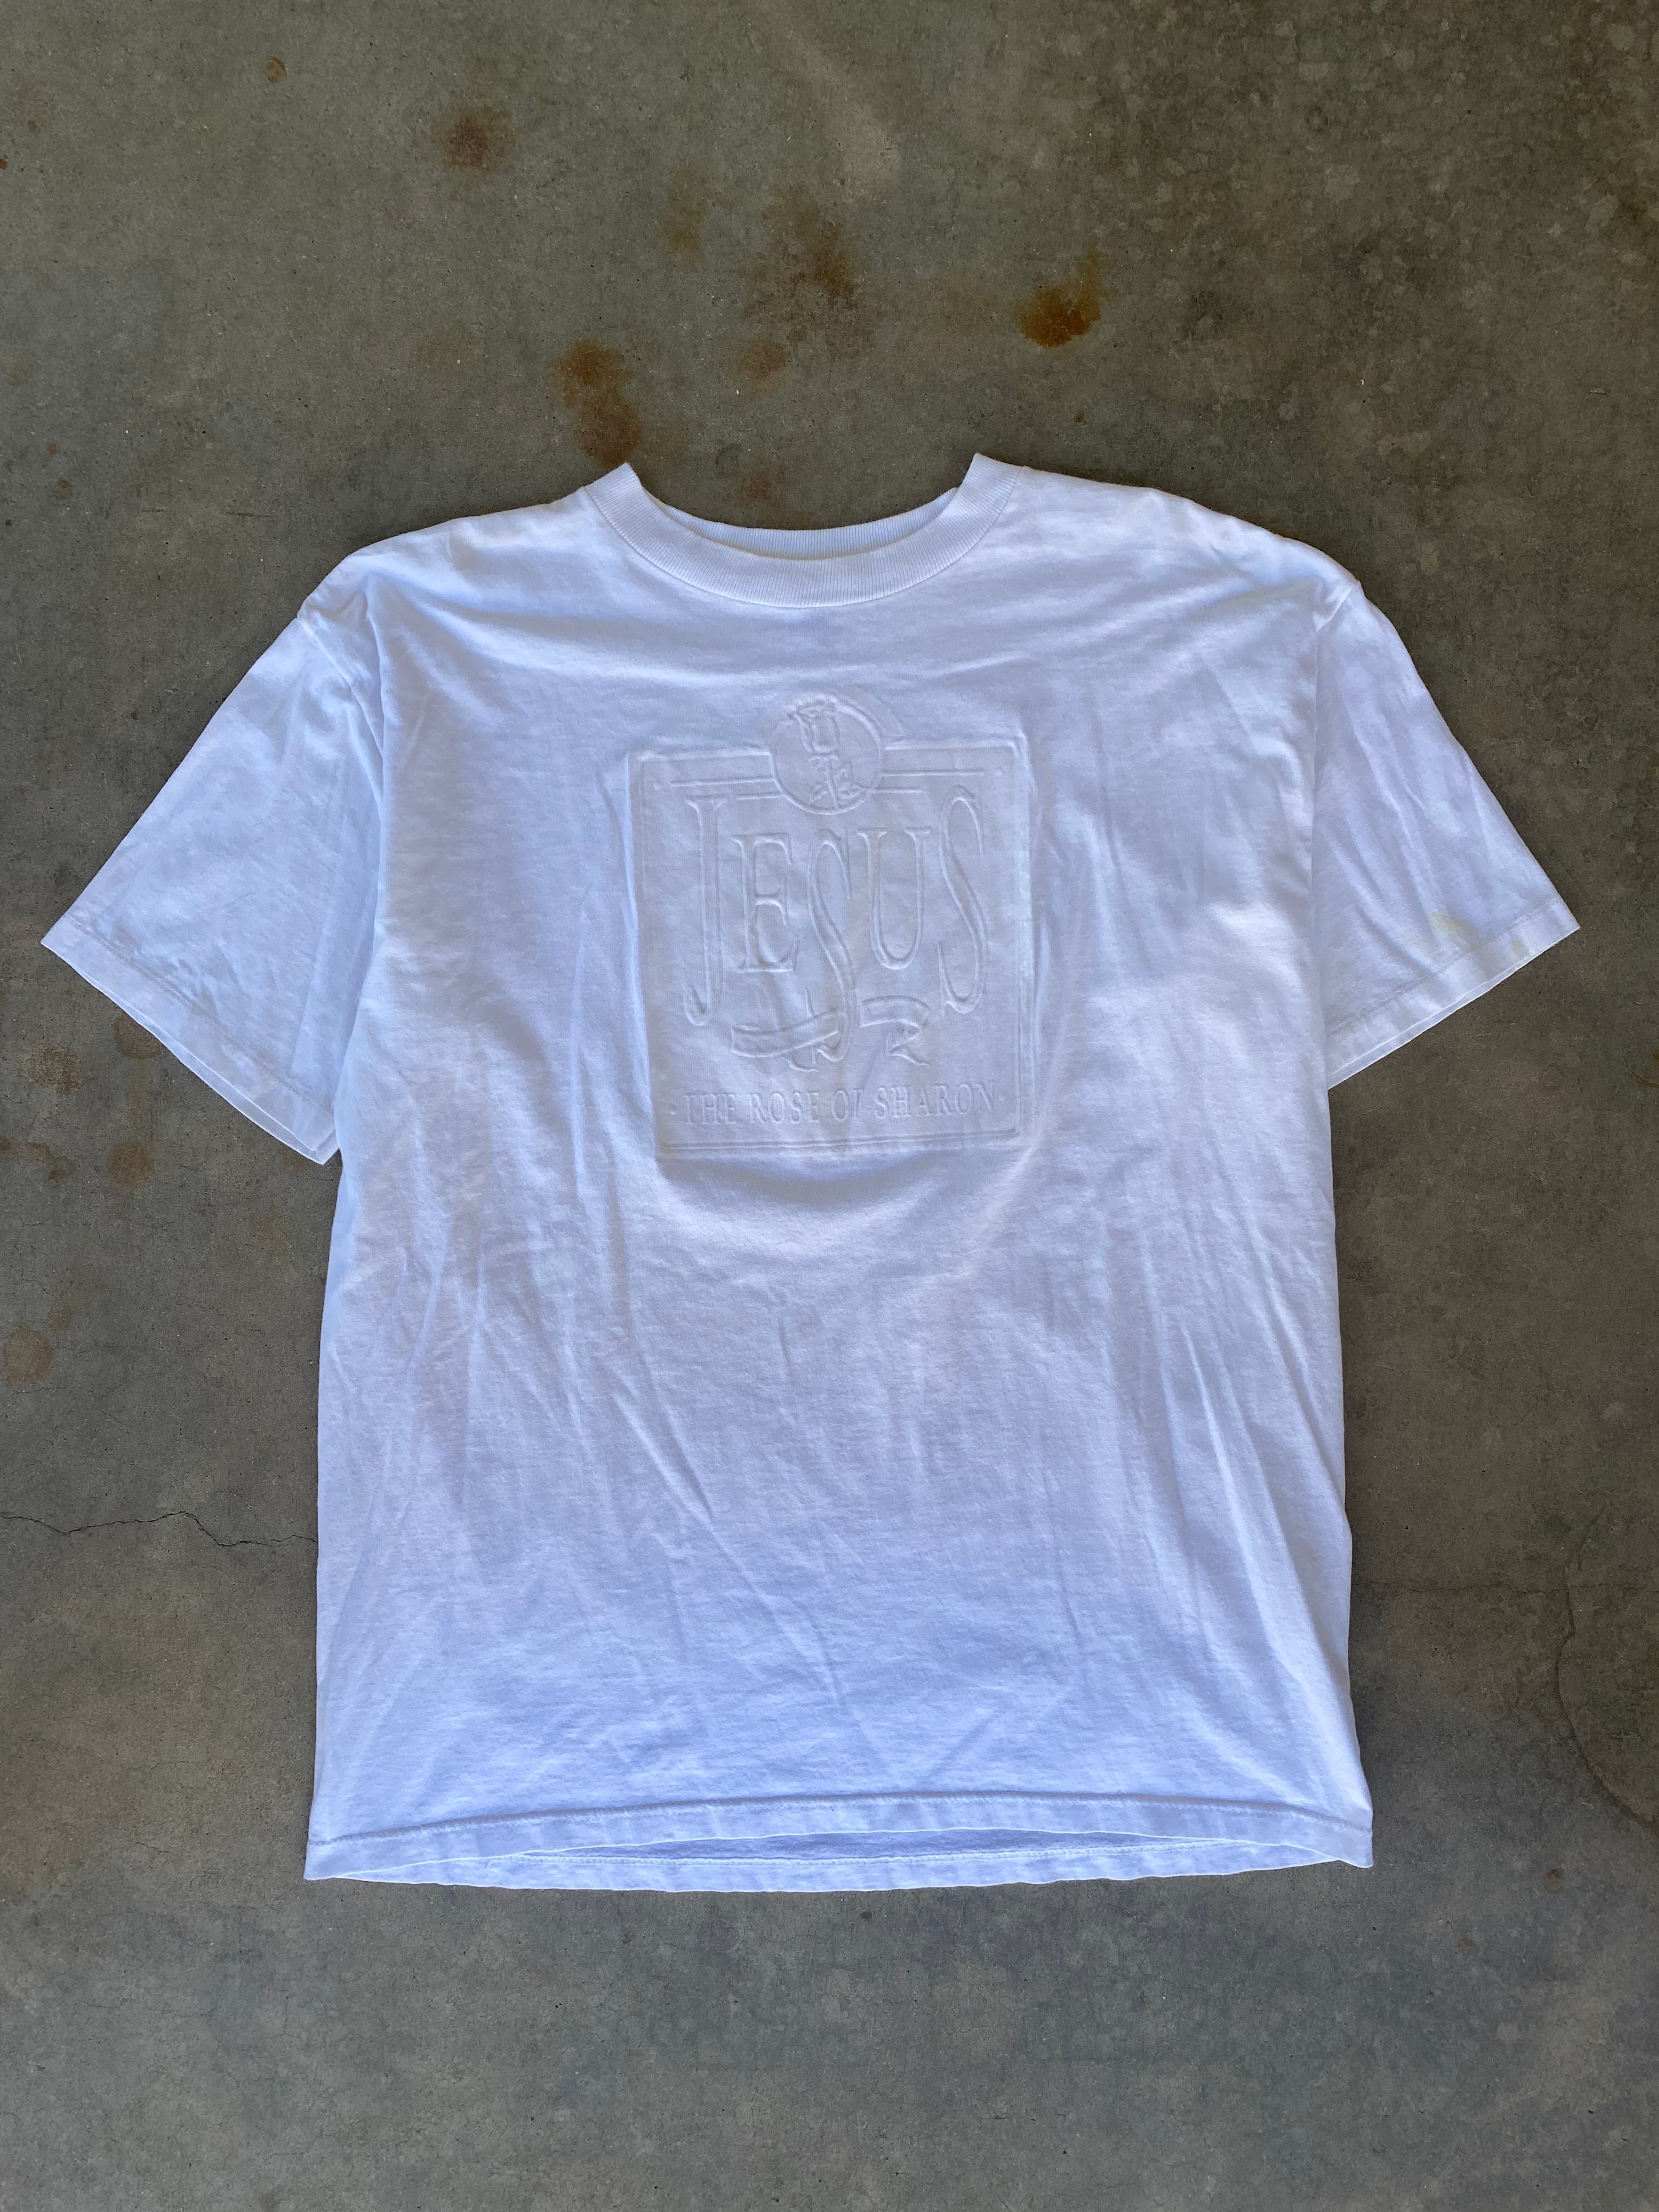 1990s Jesus "Rose of Sharon" T-Shirt (XL)